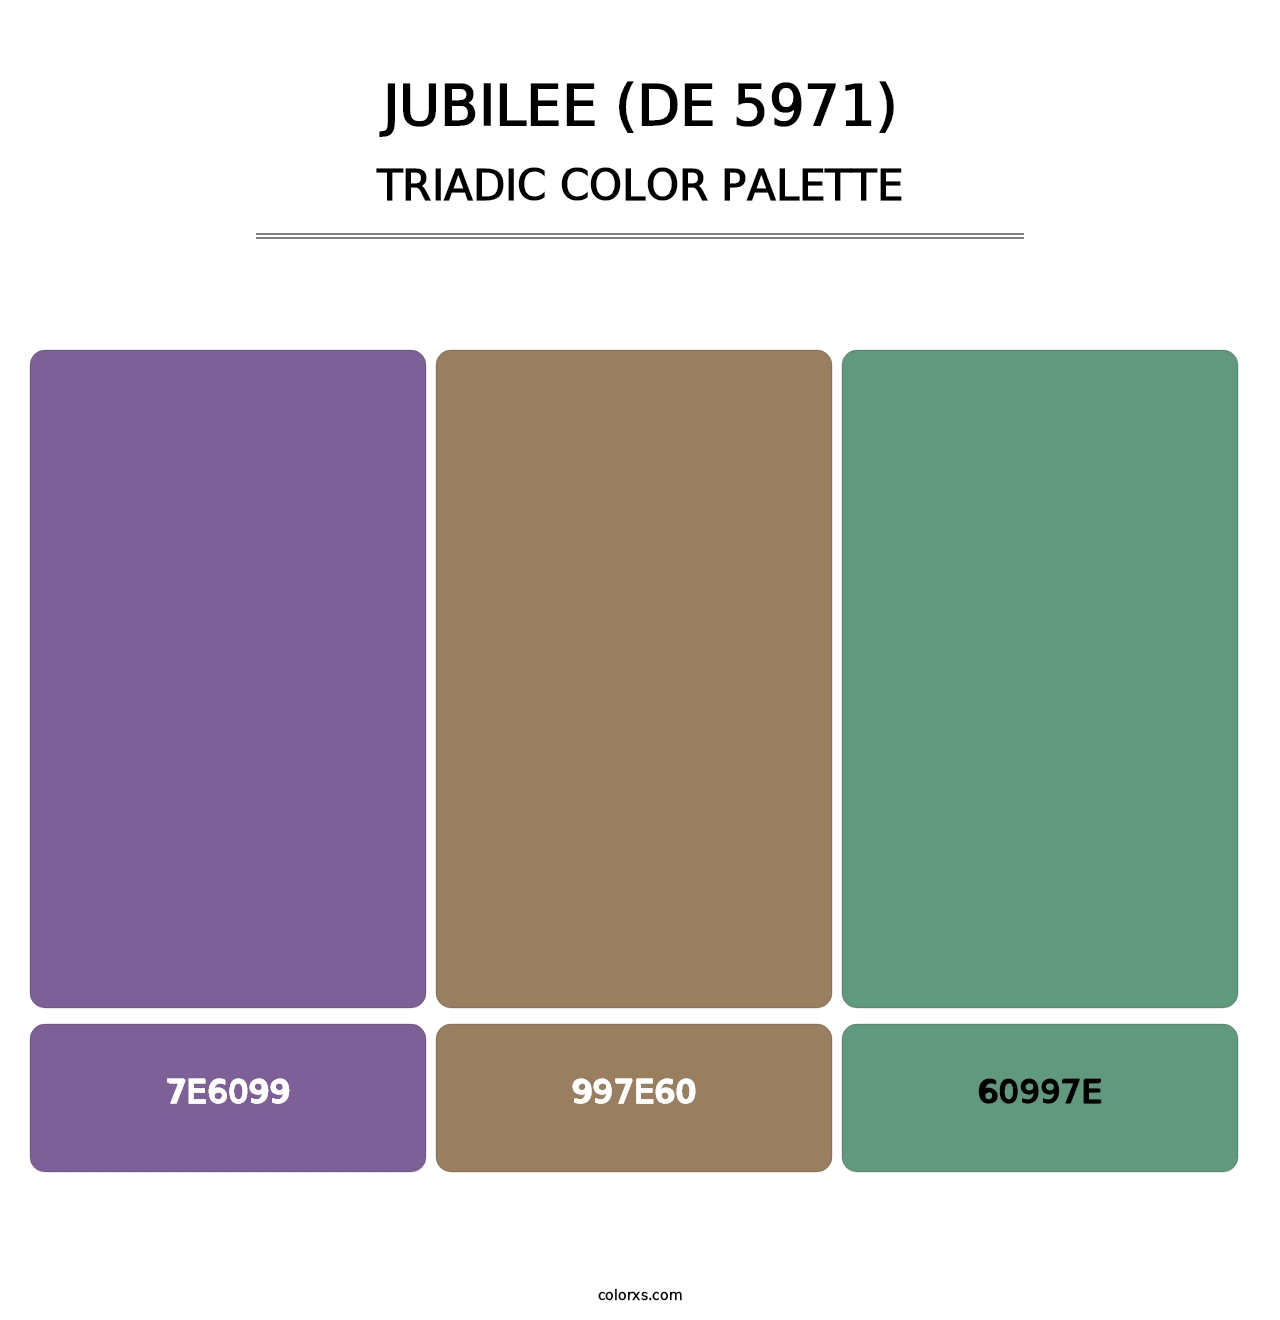 Jubilee (DE 5971) - Triadic Color Palette